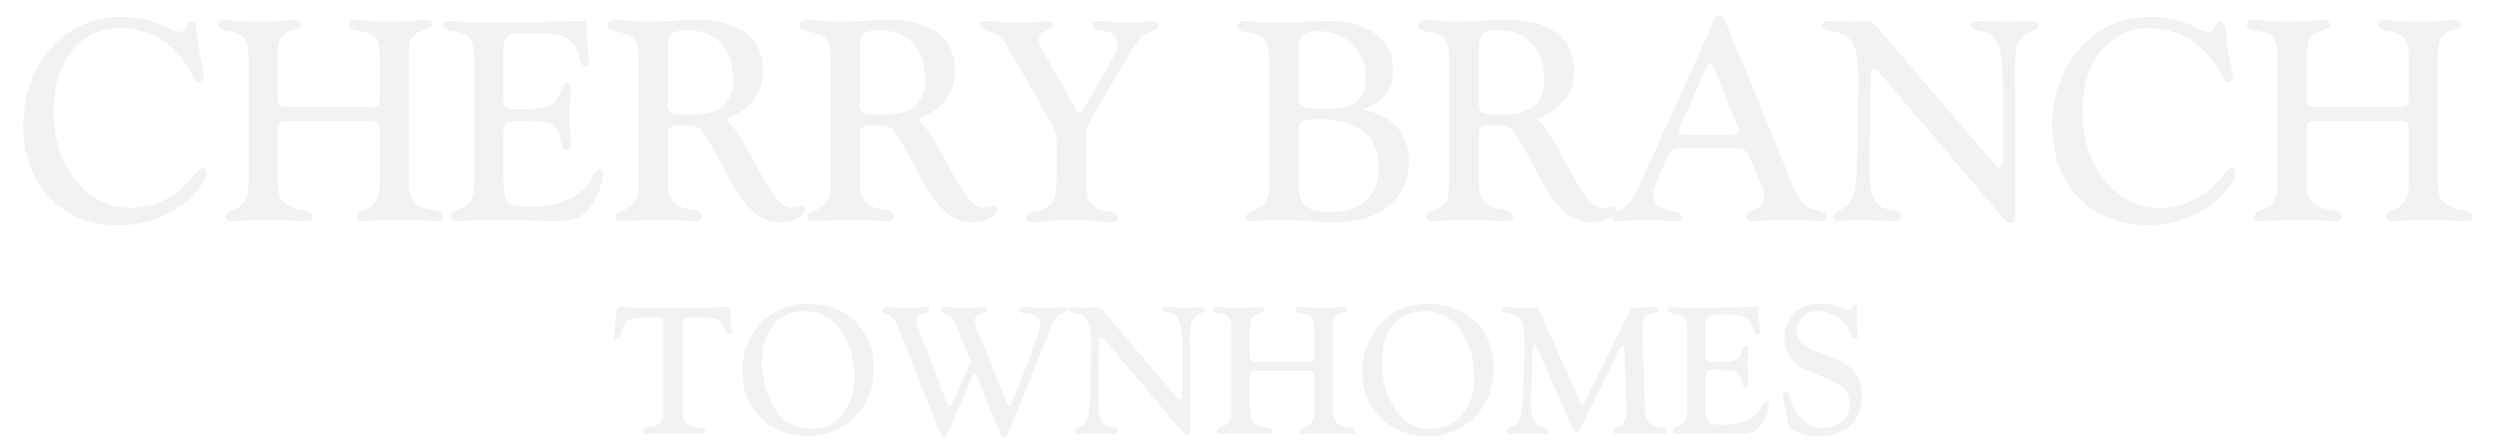 Cherry Branch Townhomes Logo